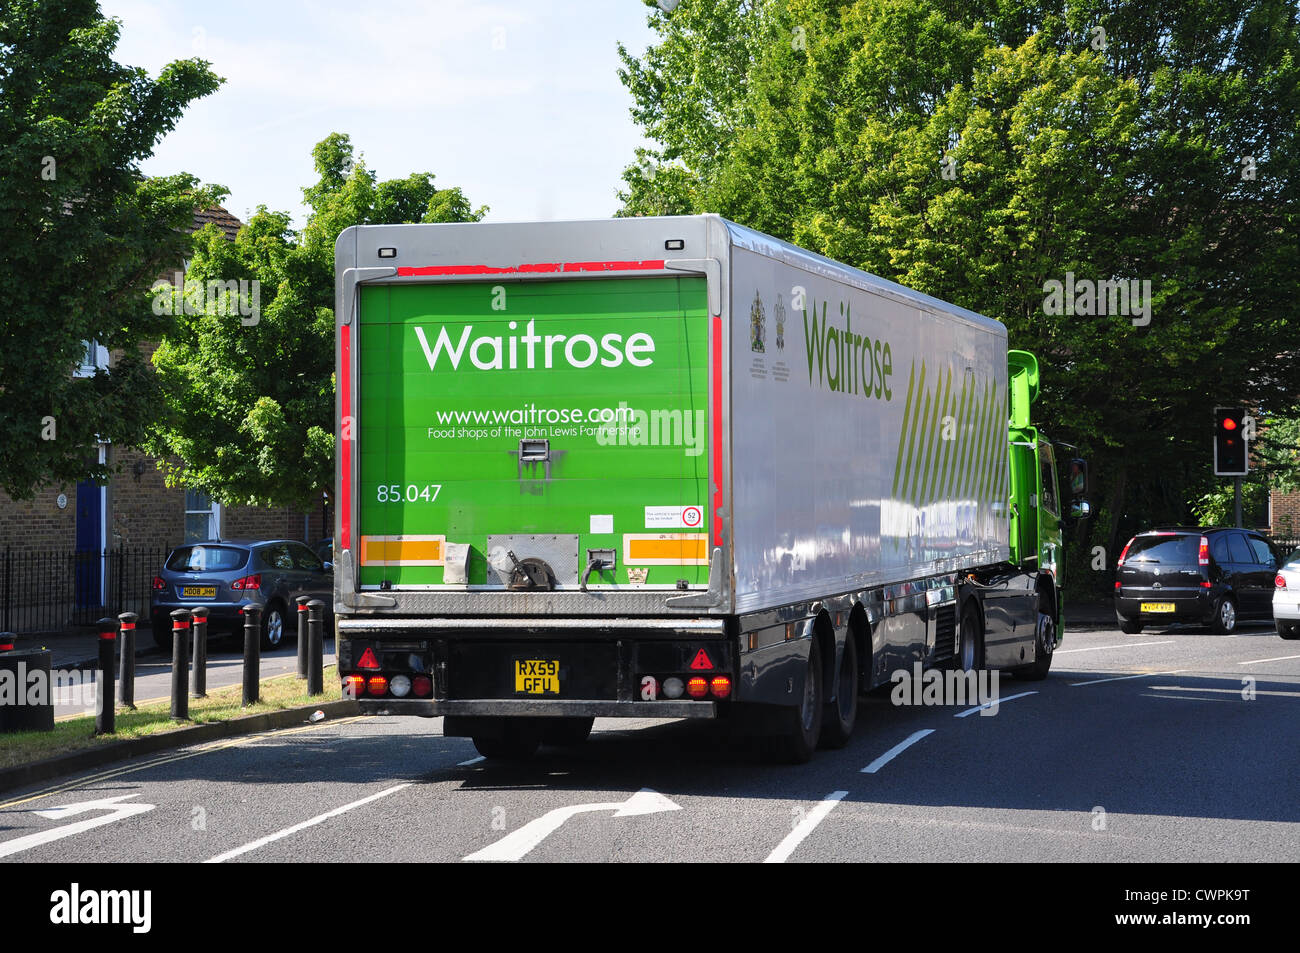 Waitrose supermarket truck in Hale Street, Staines-upon-Thames, Surrey, England, United Kingdom Stock Photo